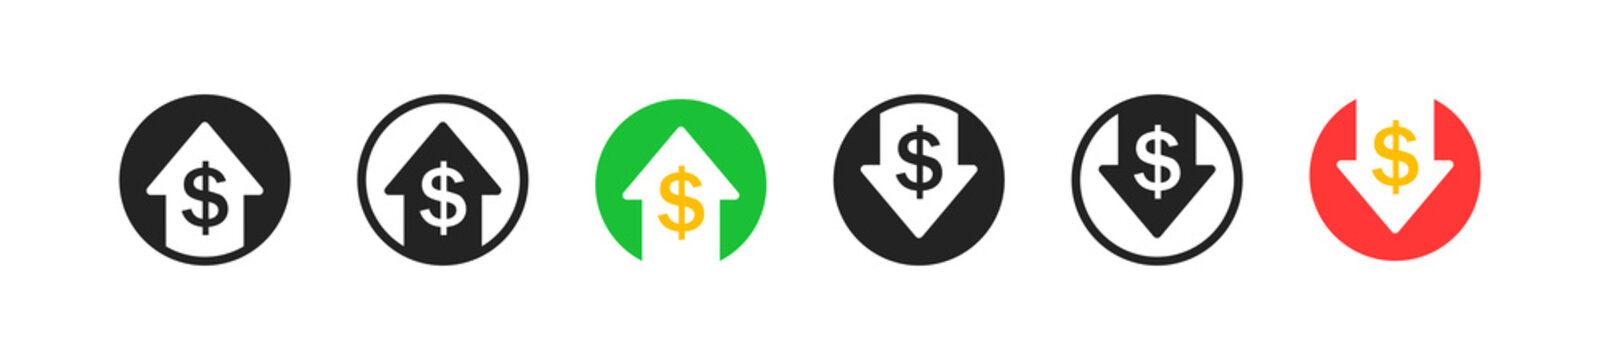 Finance growth icon set. Flat design. Success concept. Coin signs. Losing money. Business profit symbol.